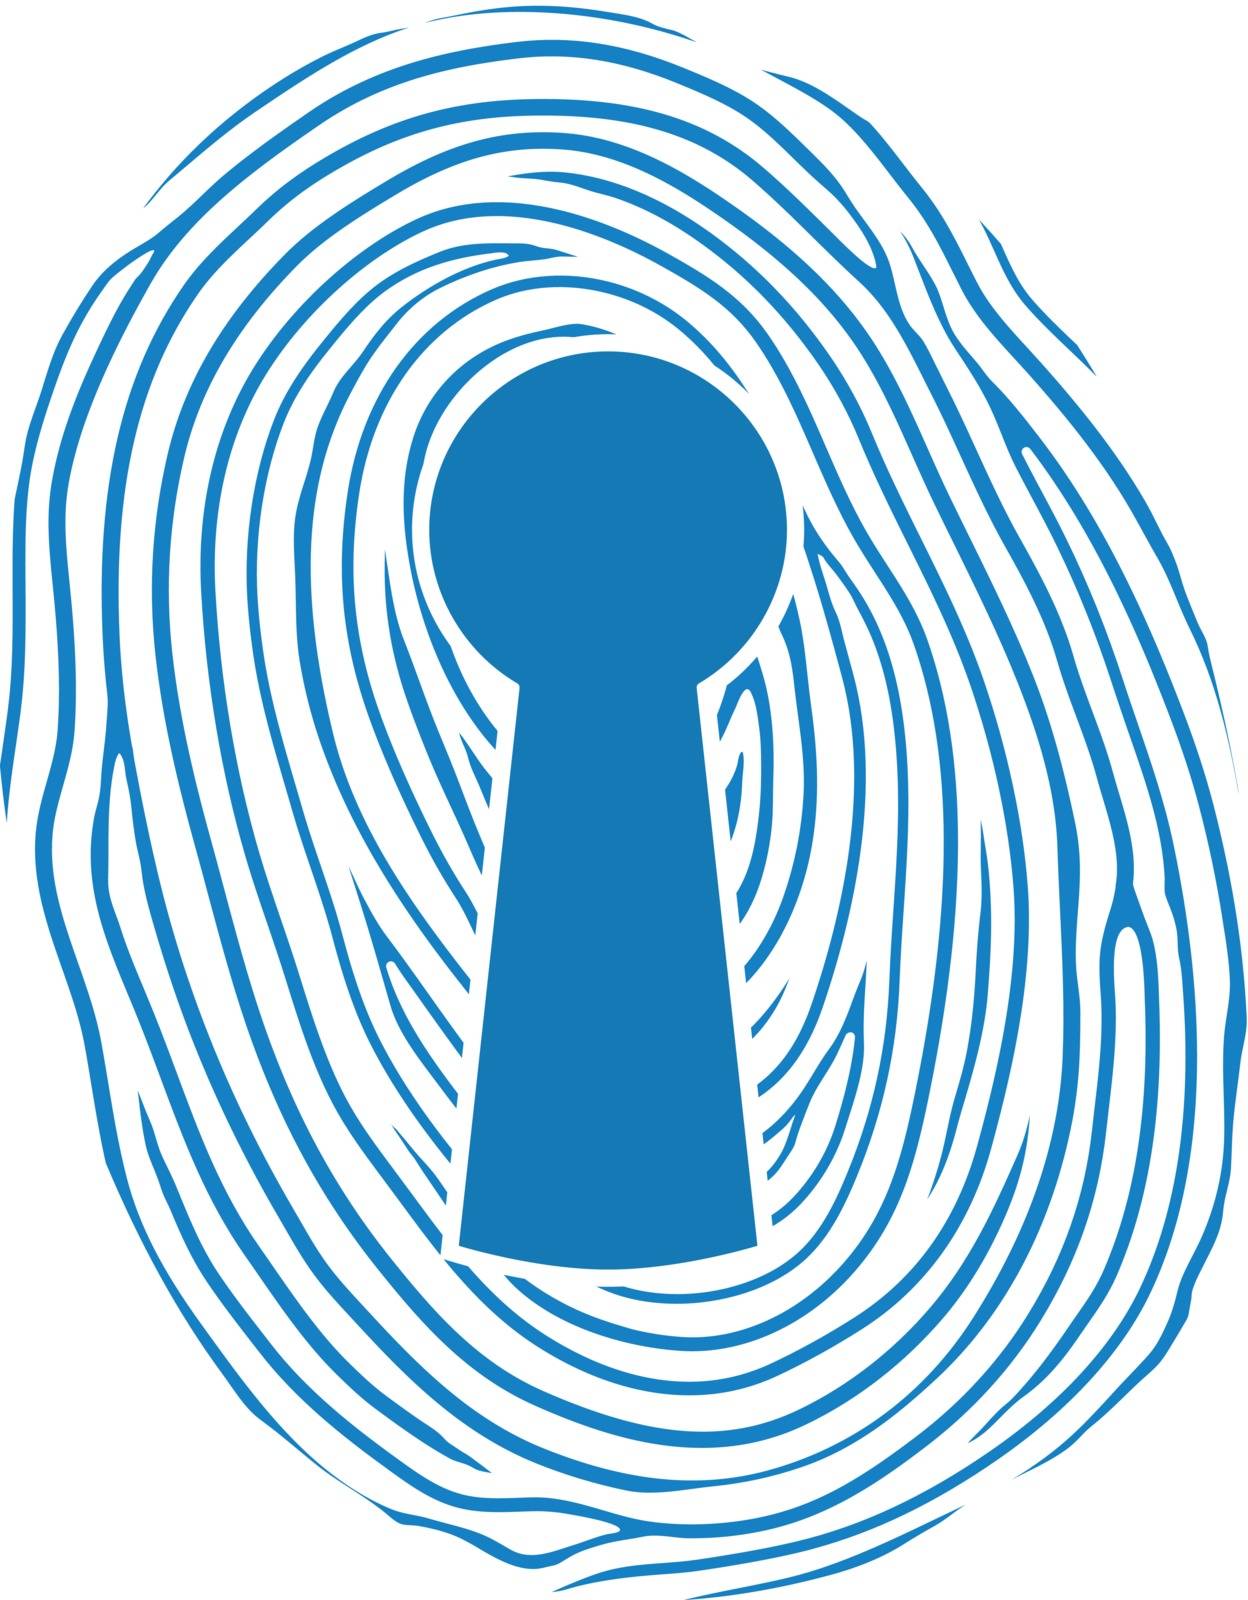 Fingerprint over a lock keyhole by adrian_n